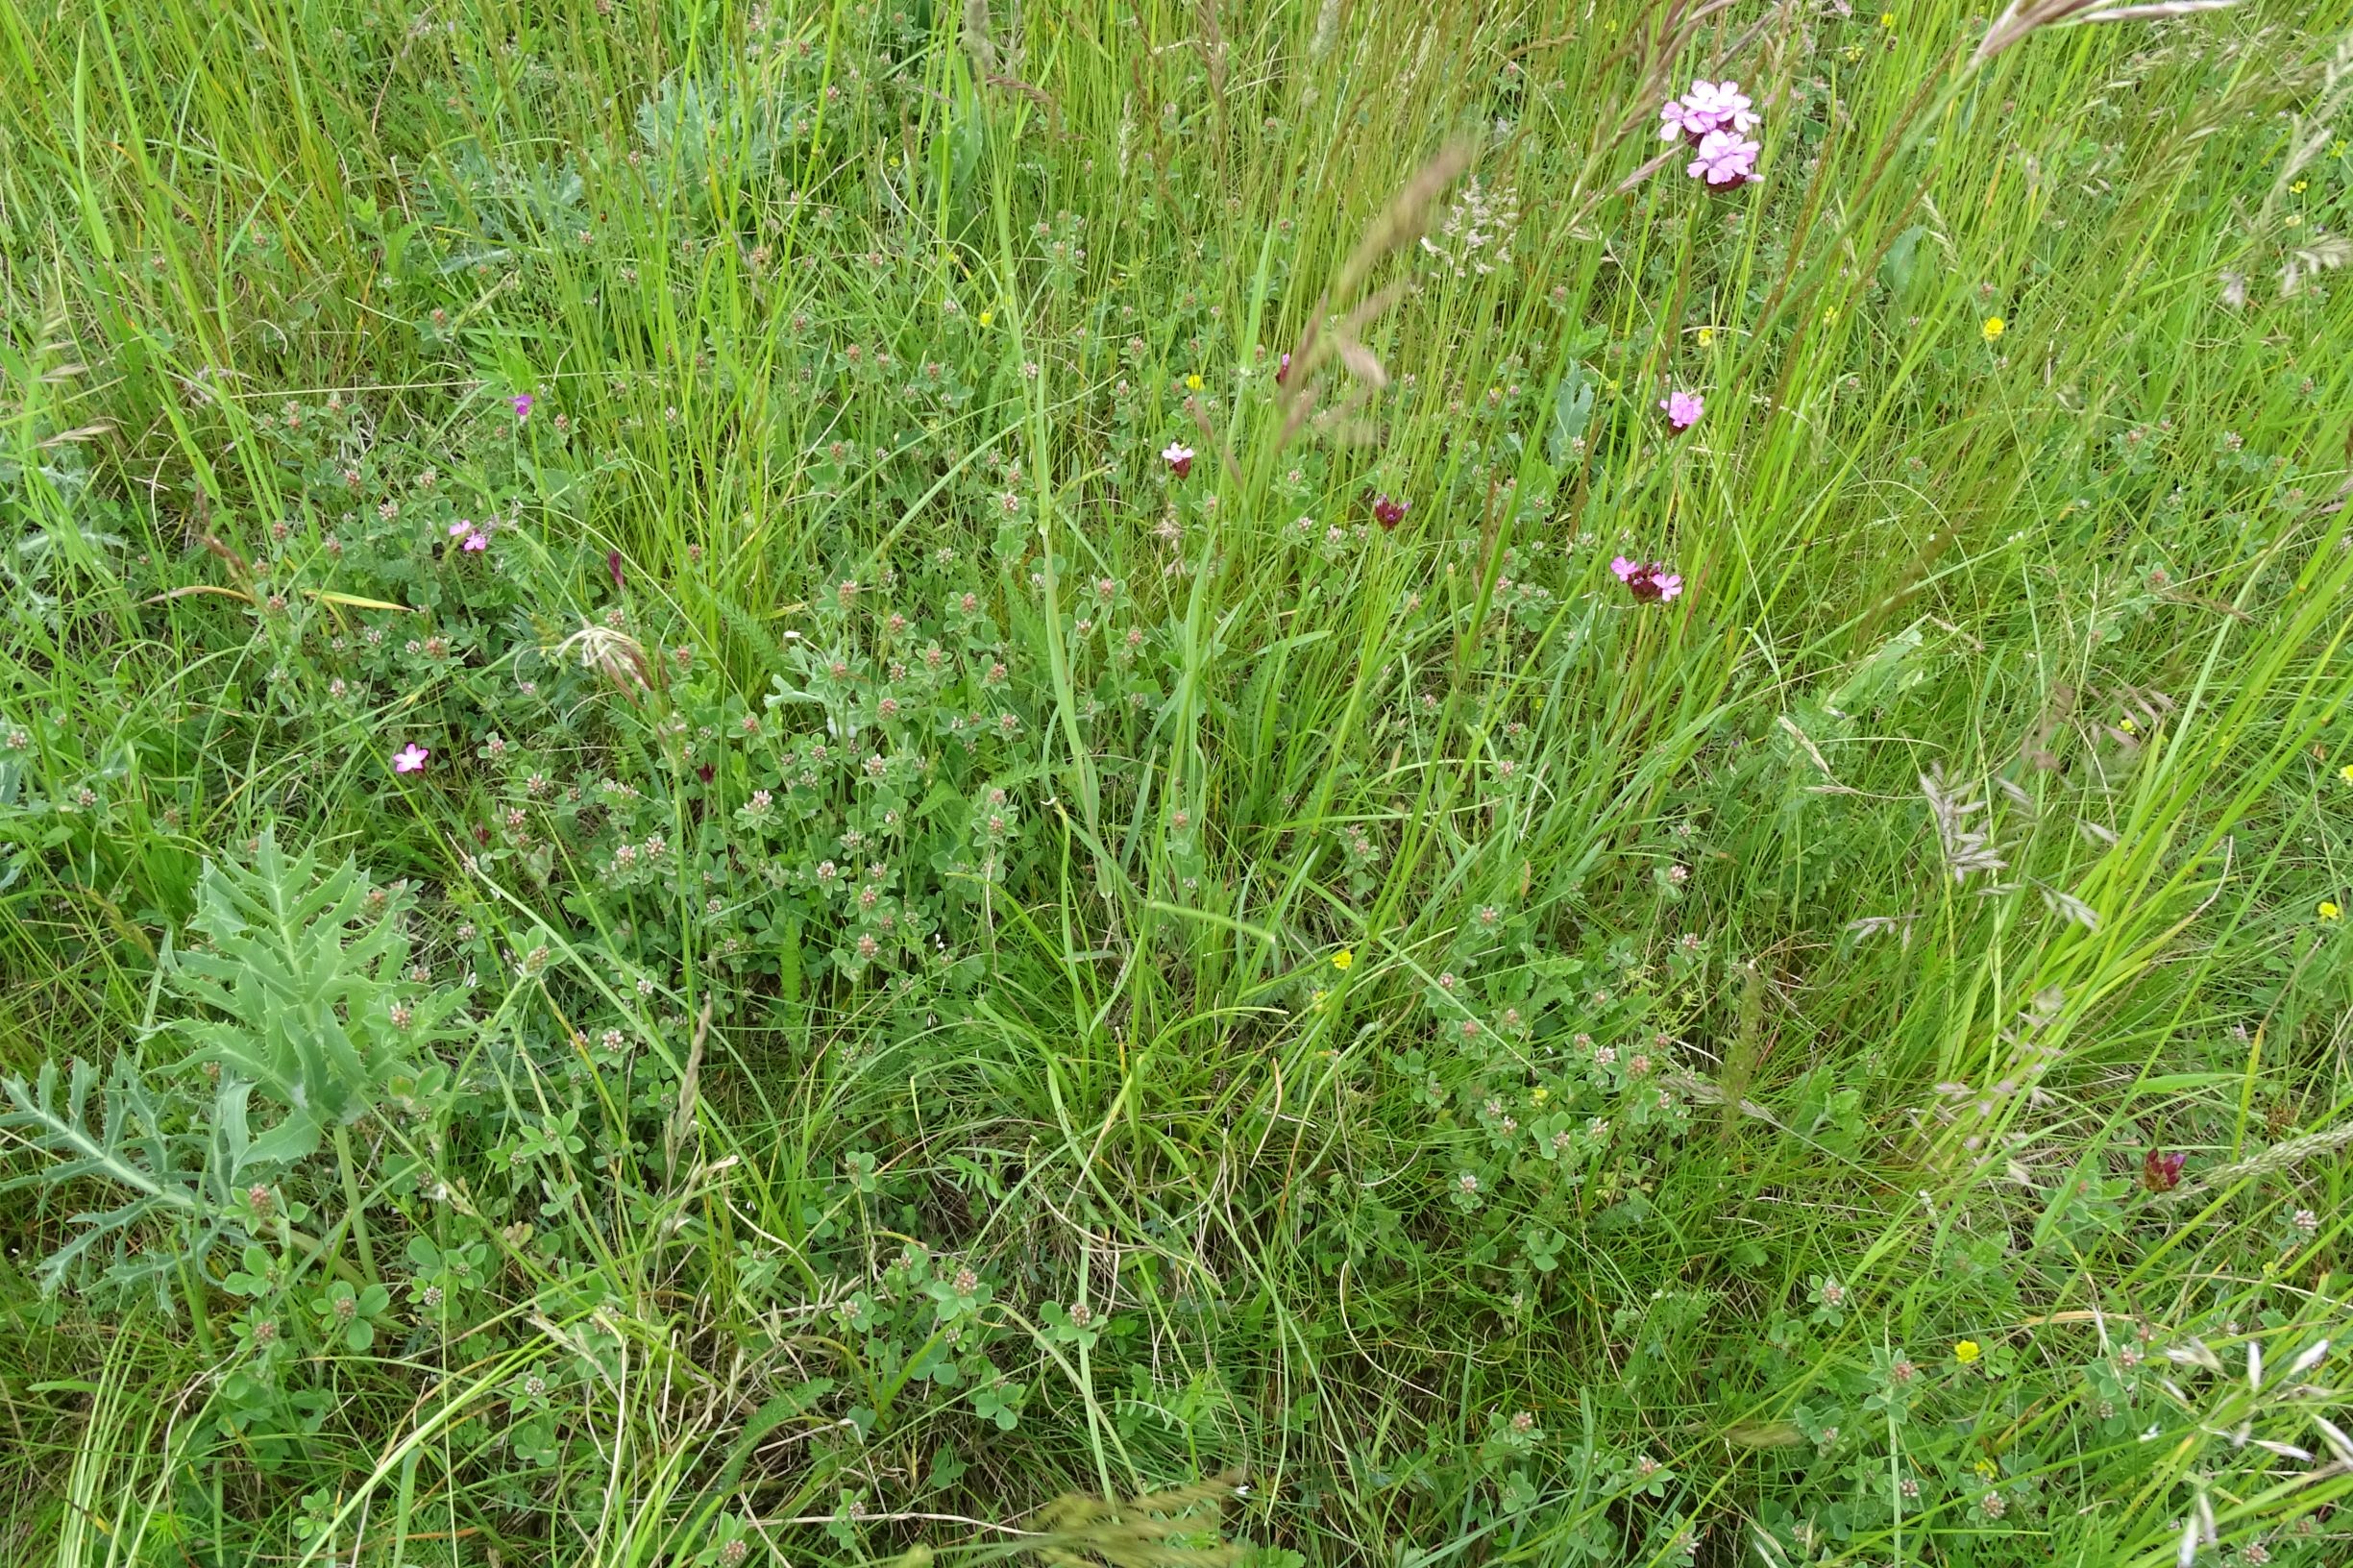 DSC09099 leithagebirge breitenbrunn, hoadl, 2021-05-29, trifolium striatum, dianthus pontederae, eryngium campestre etc.JPG